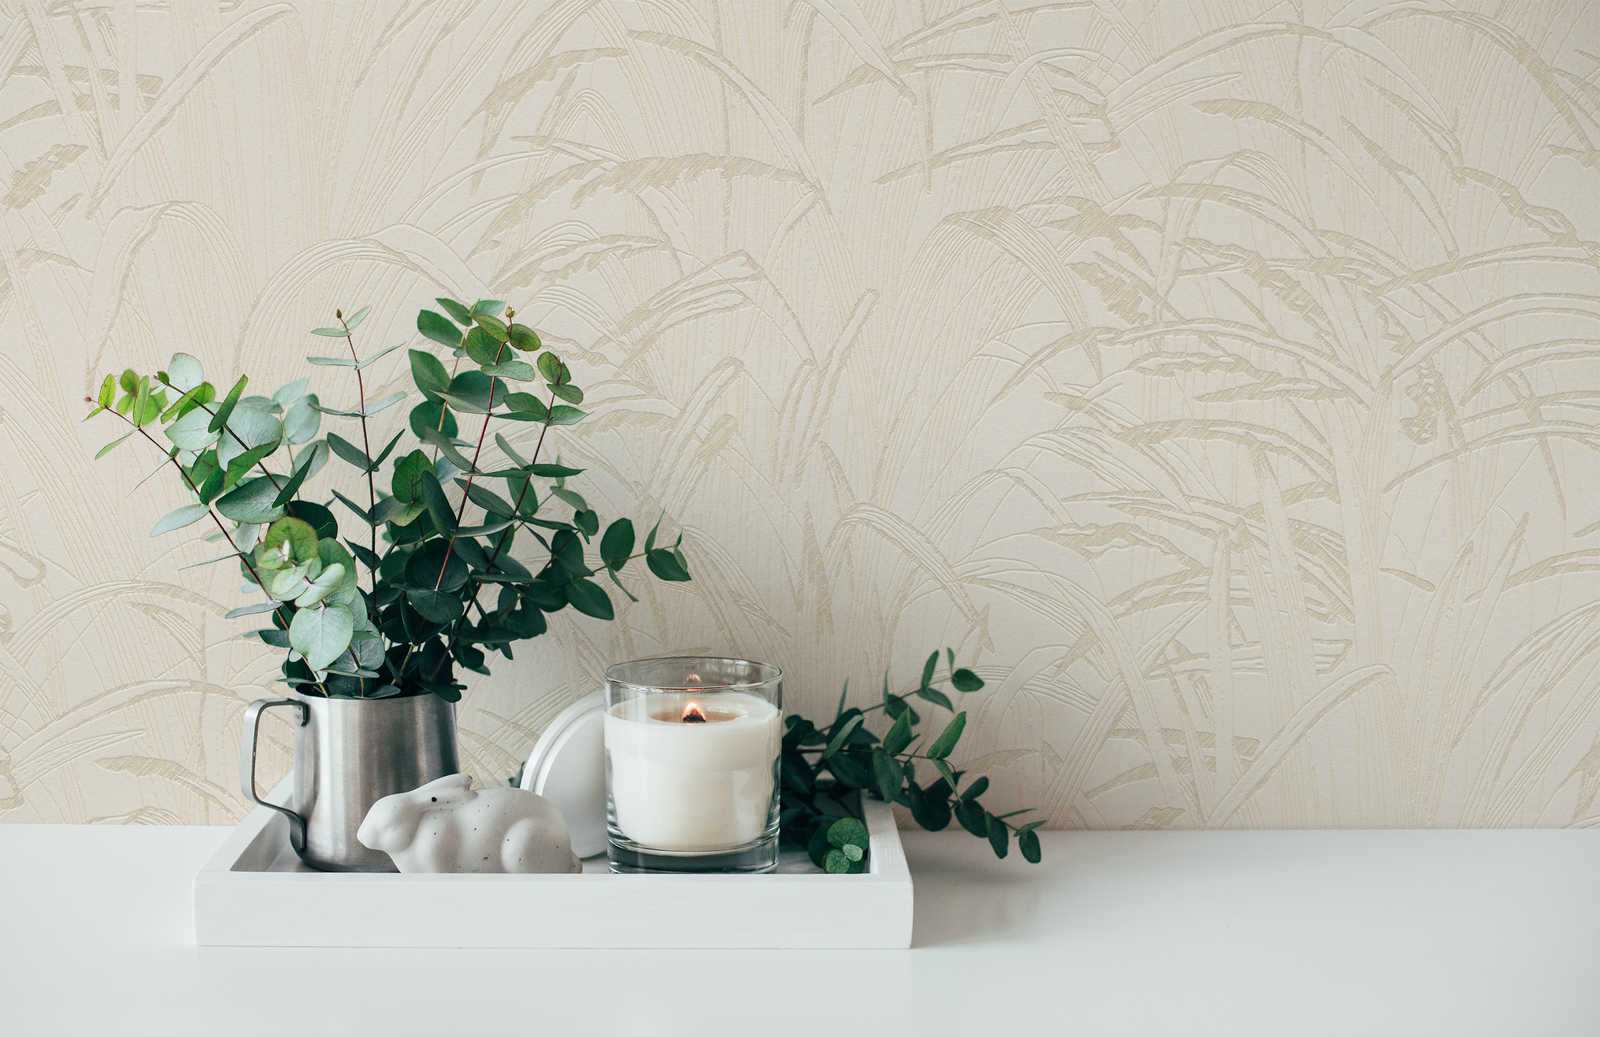             Papel pintado naturaleza hojas de caña con color metálico - beige, crema
        